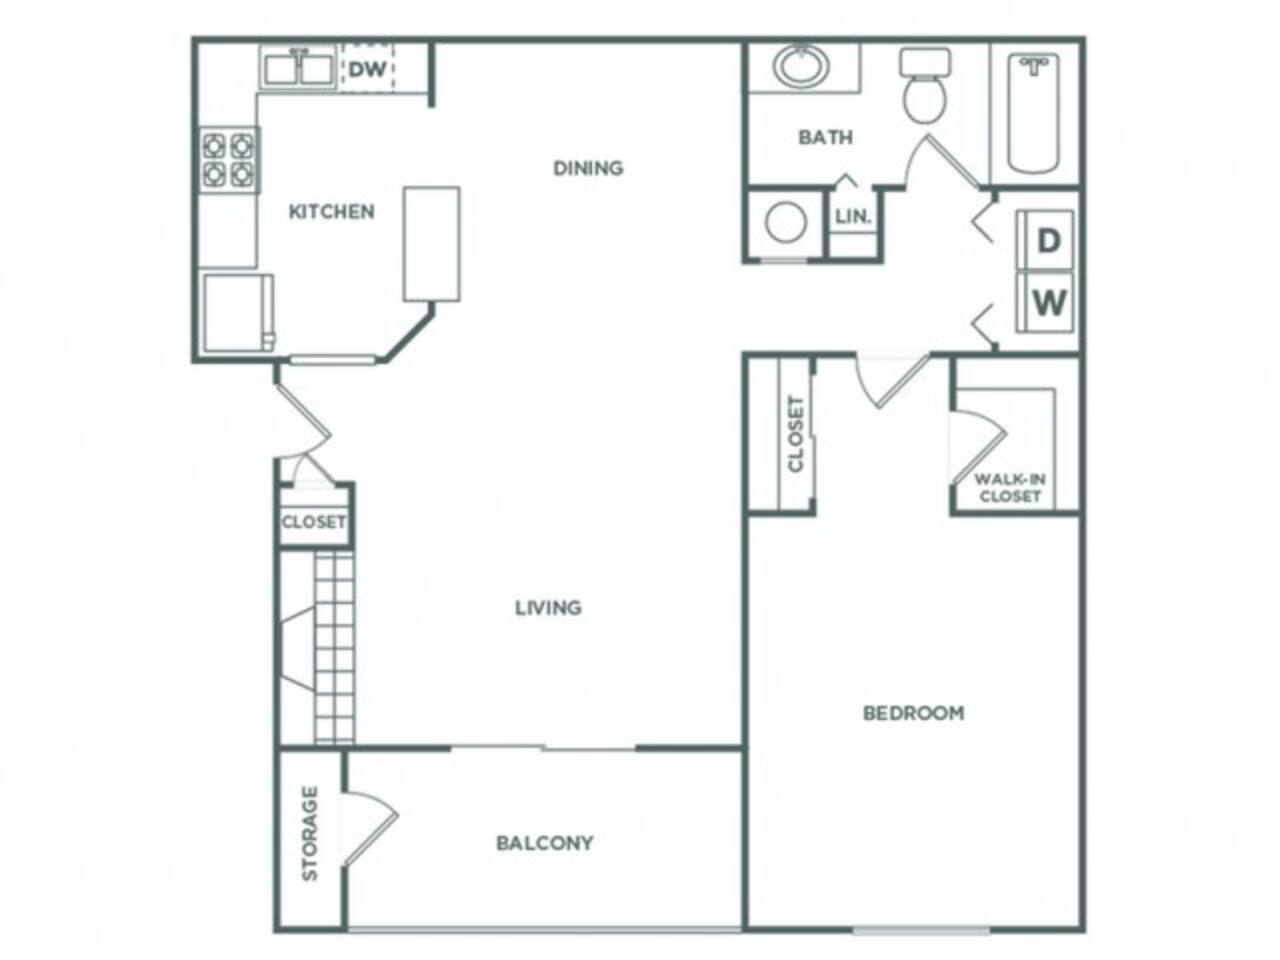 Floorplan diagram for One Bedroom One Bath (810 SF), showing 1 bedroom